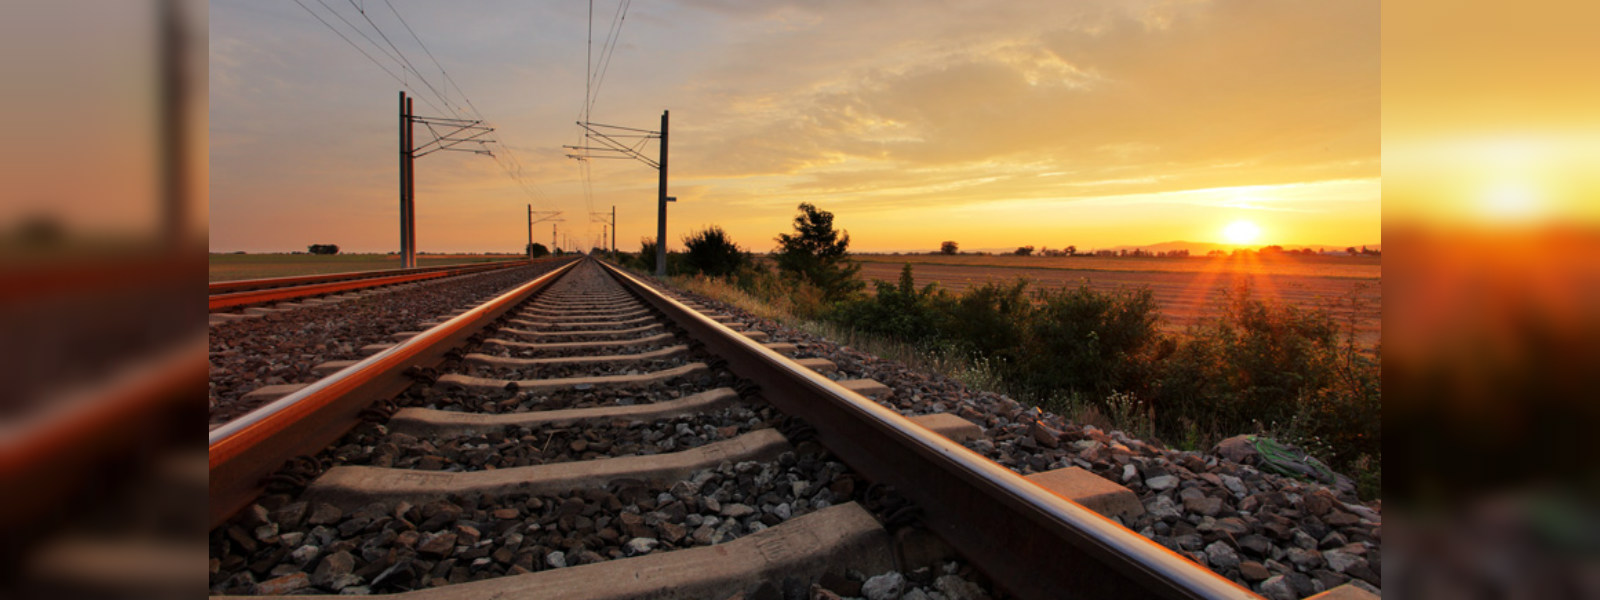 Matara-Beliatta railway track opens today